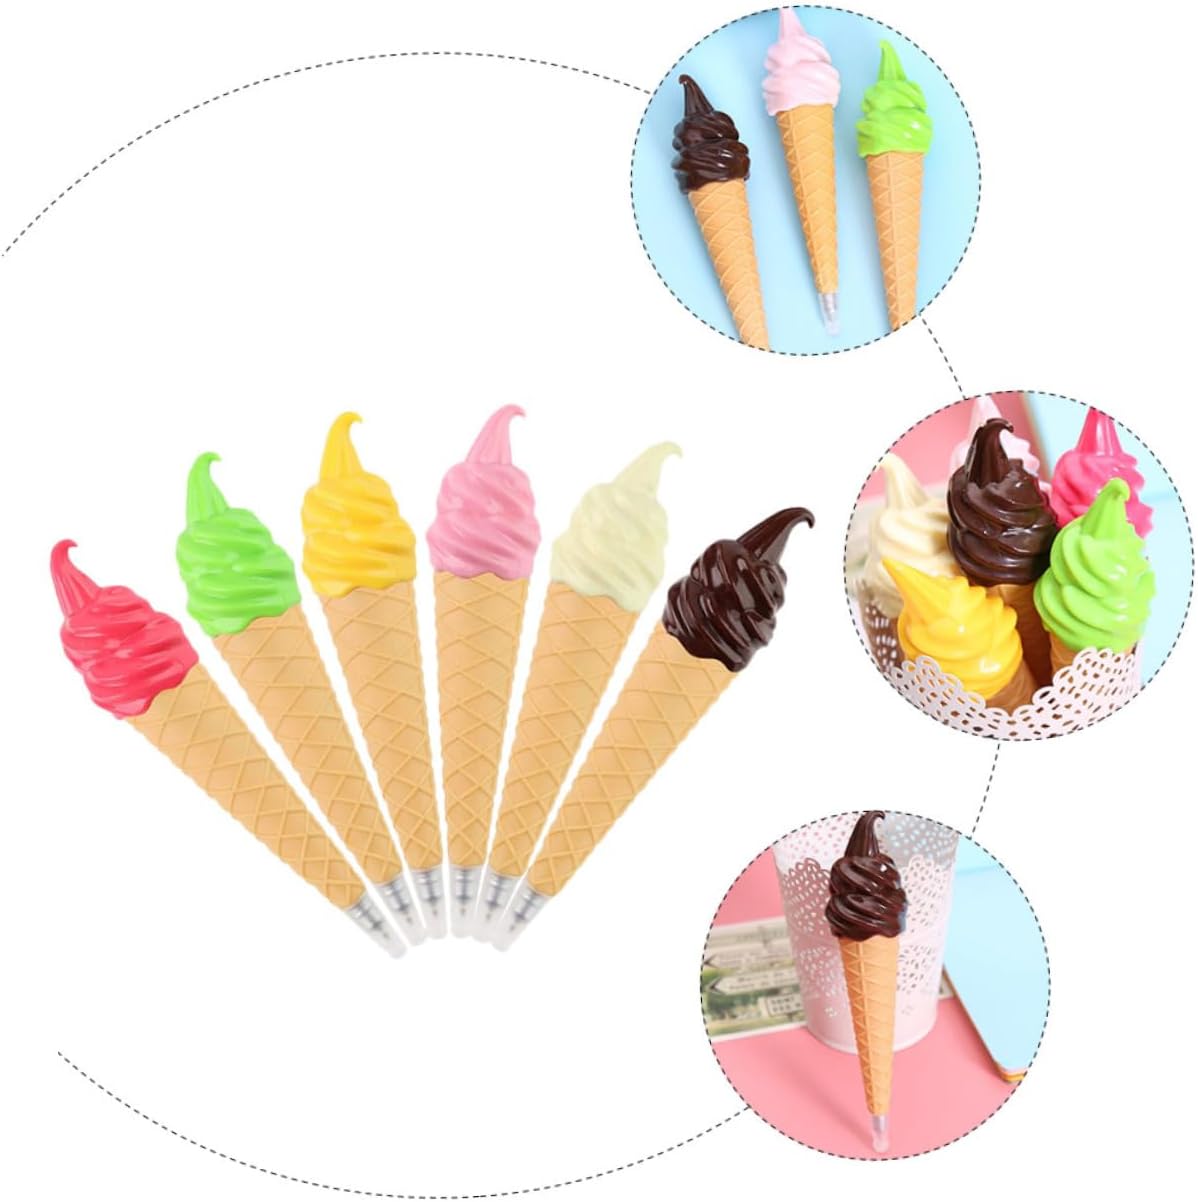 Ice-Cream Cone Pen